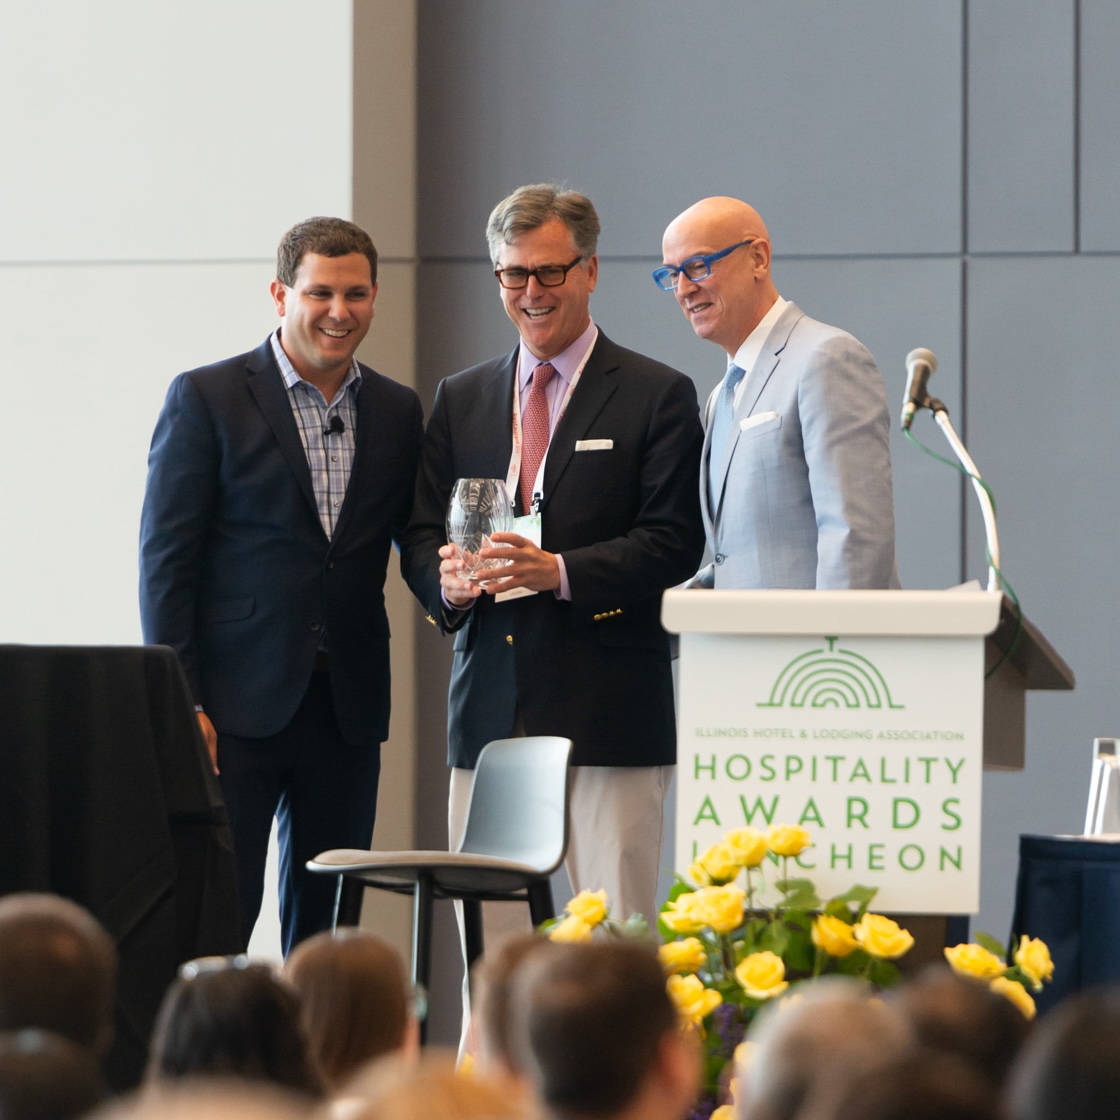 John Rutledge Honored with Ambassador of Hospitality Award by the Illinois Hotel & Lodging Association